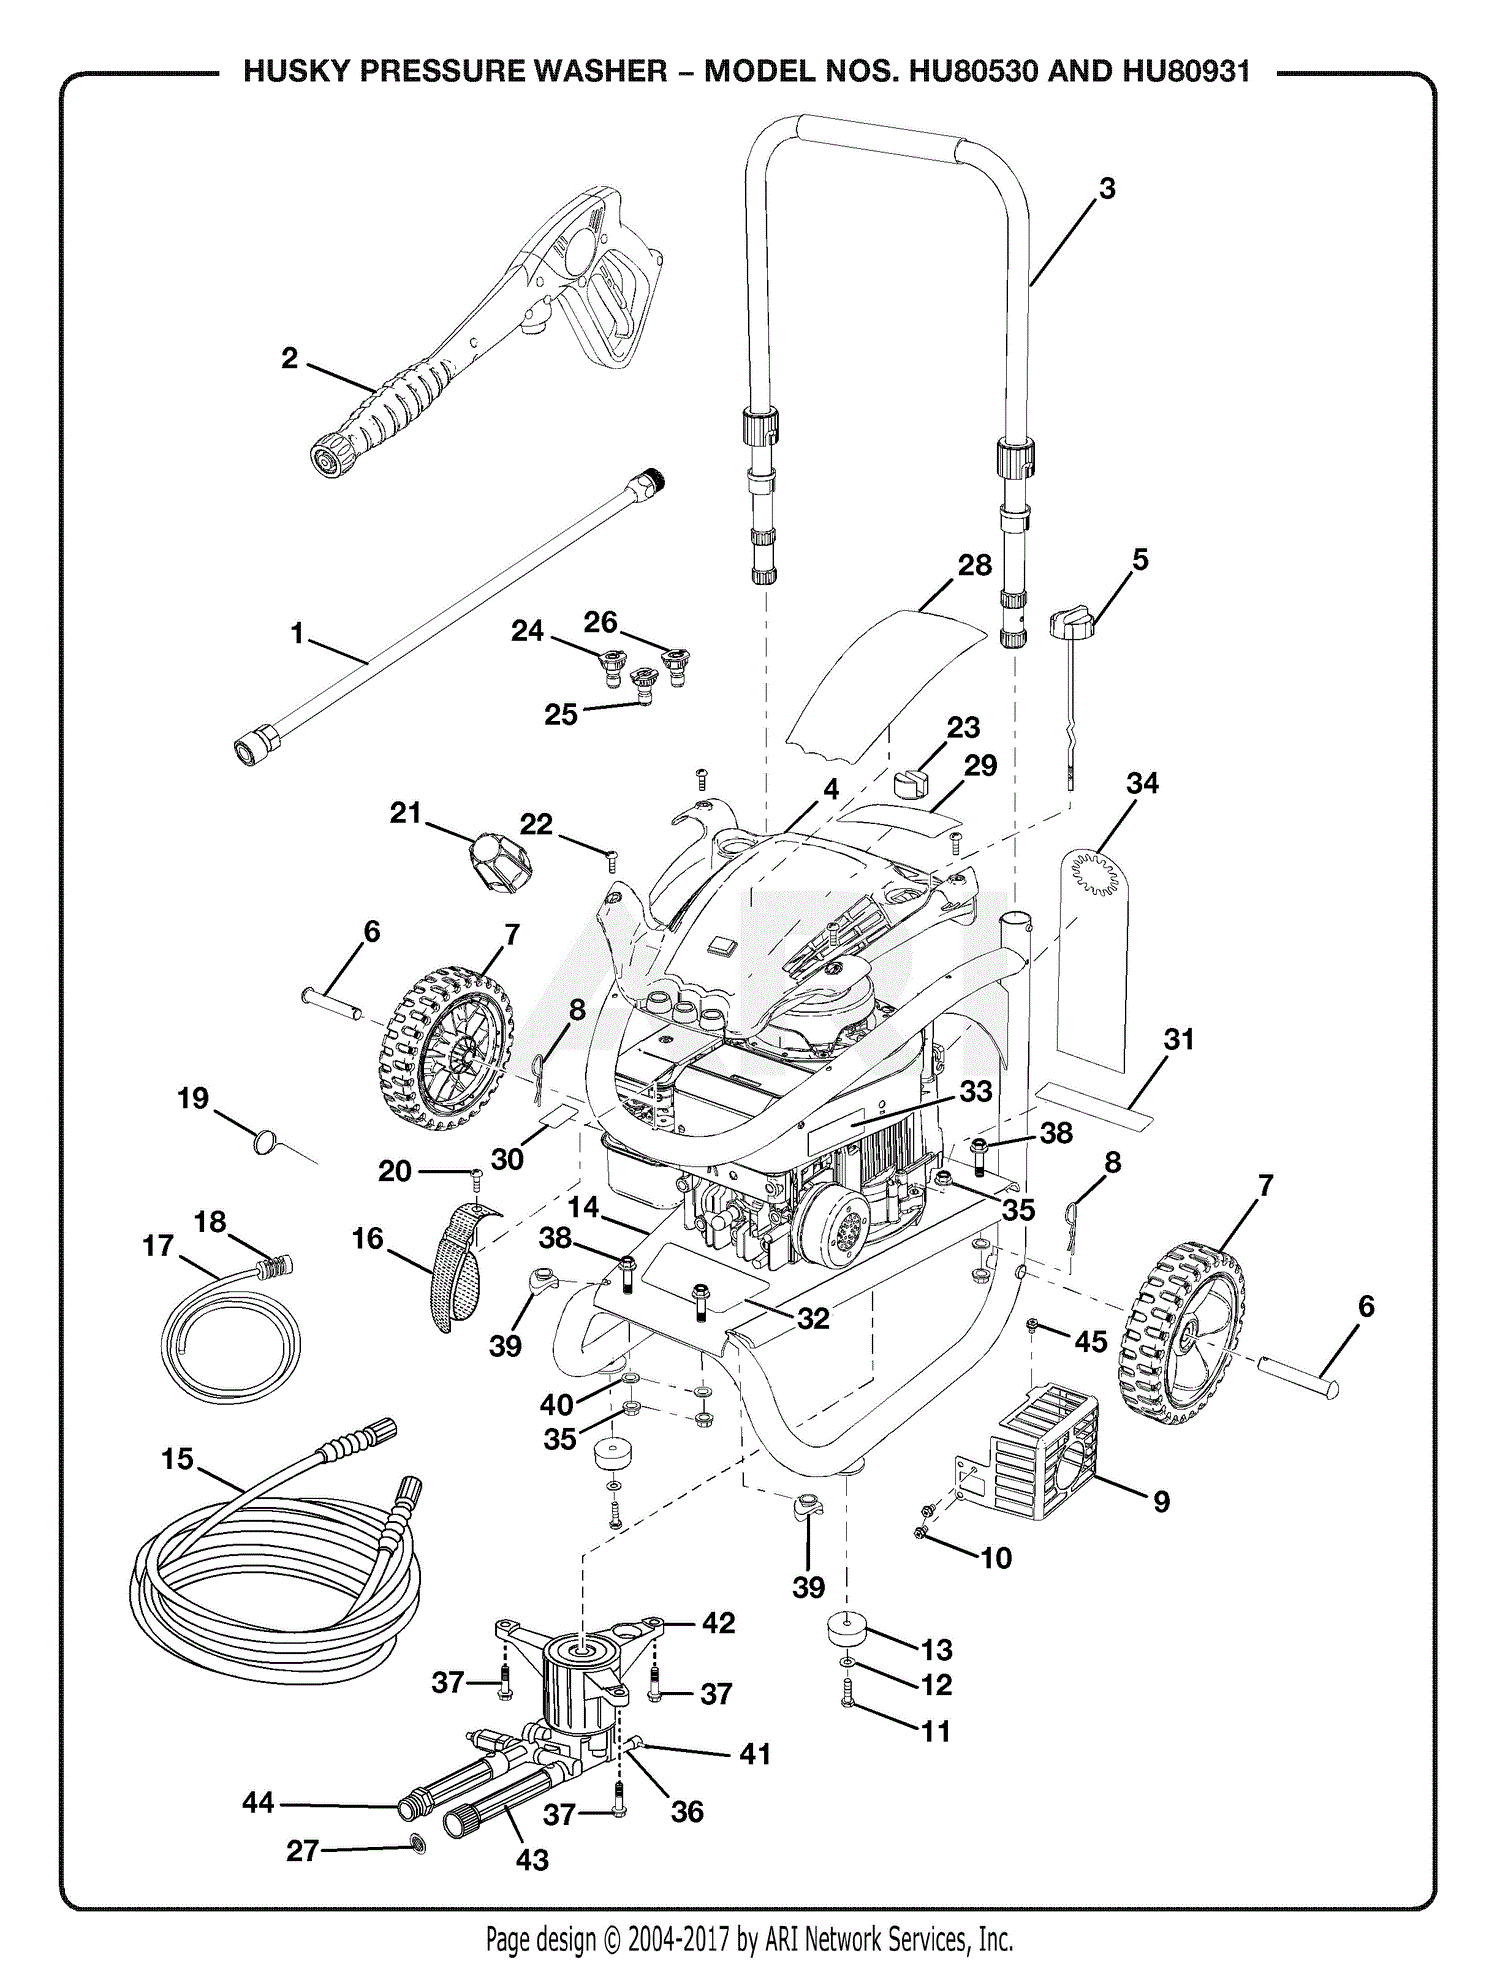 34 Husky Pressure Washer Parts Diagram